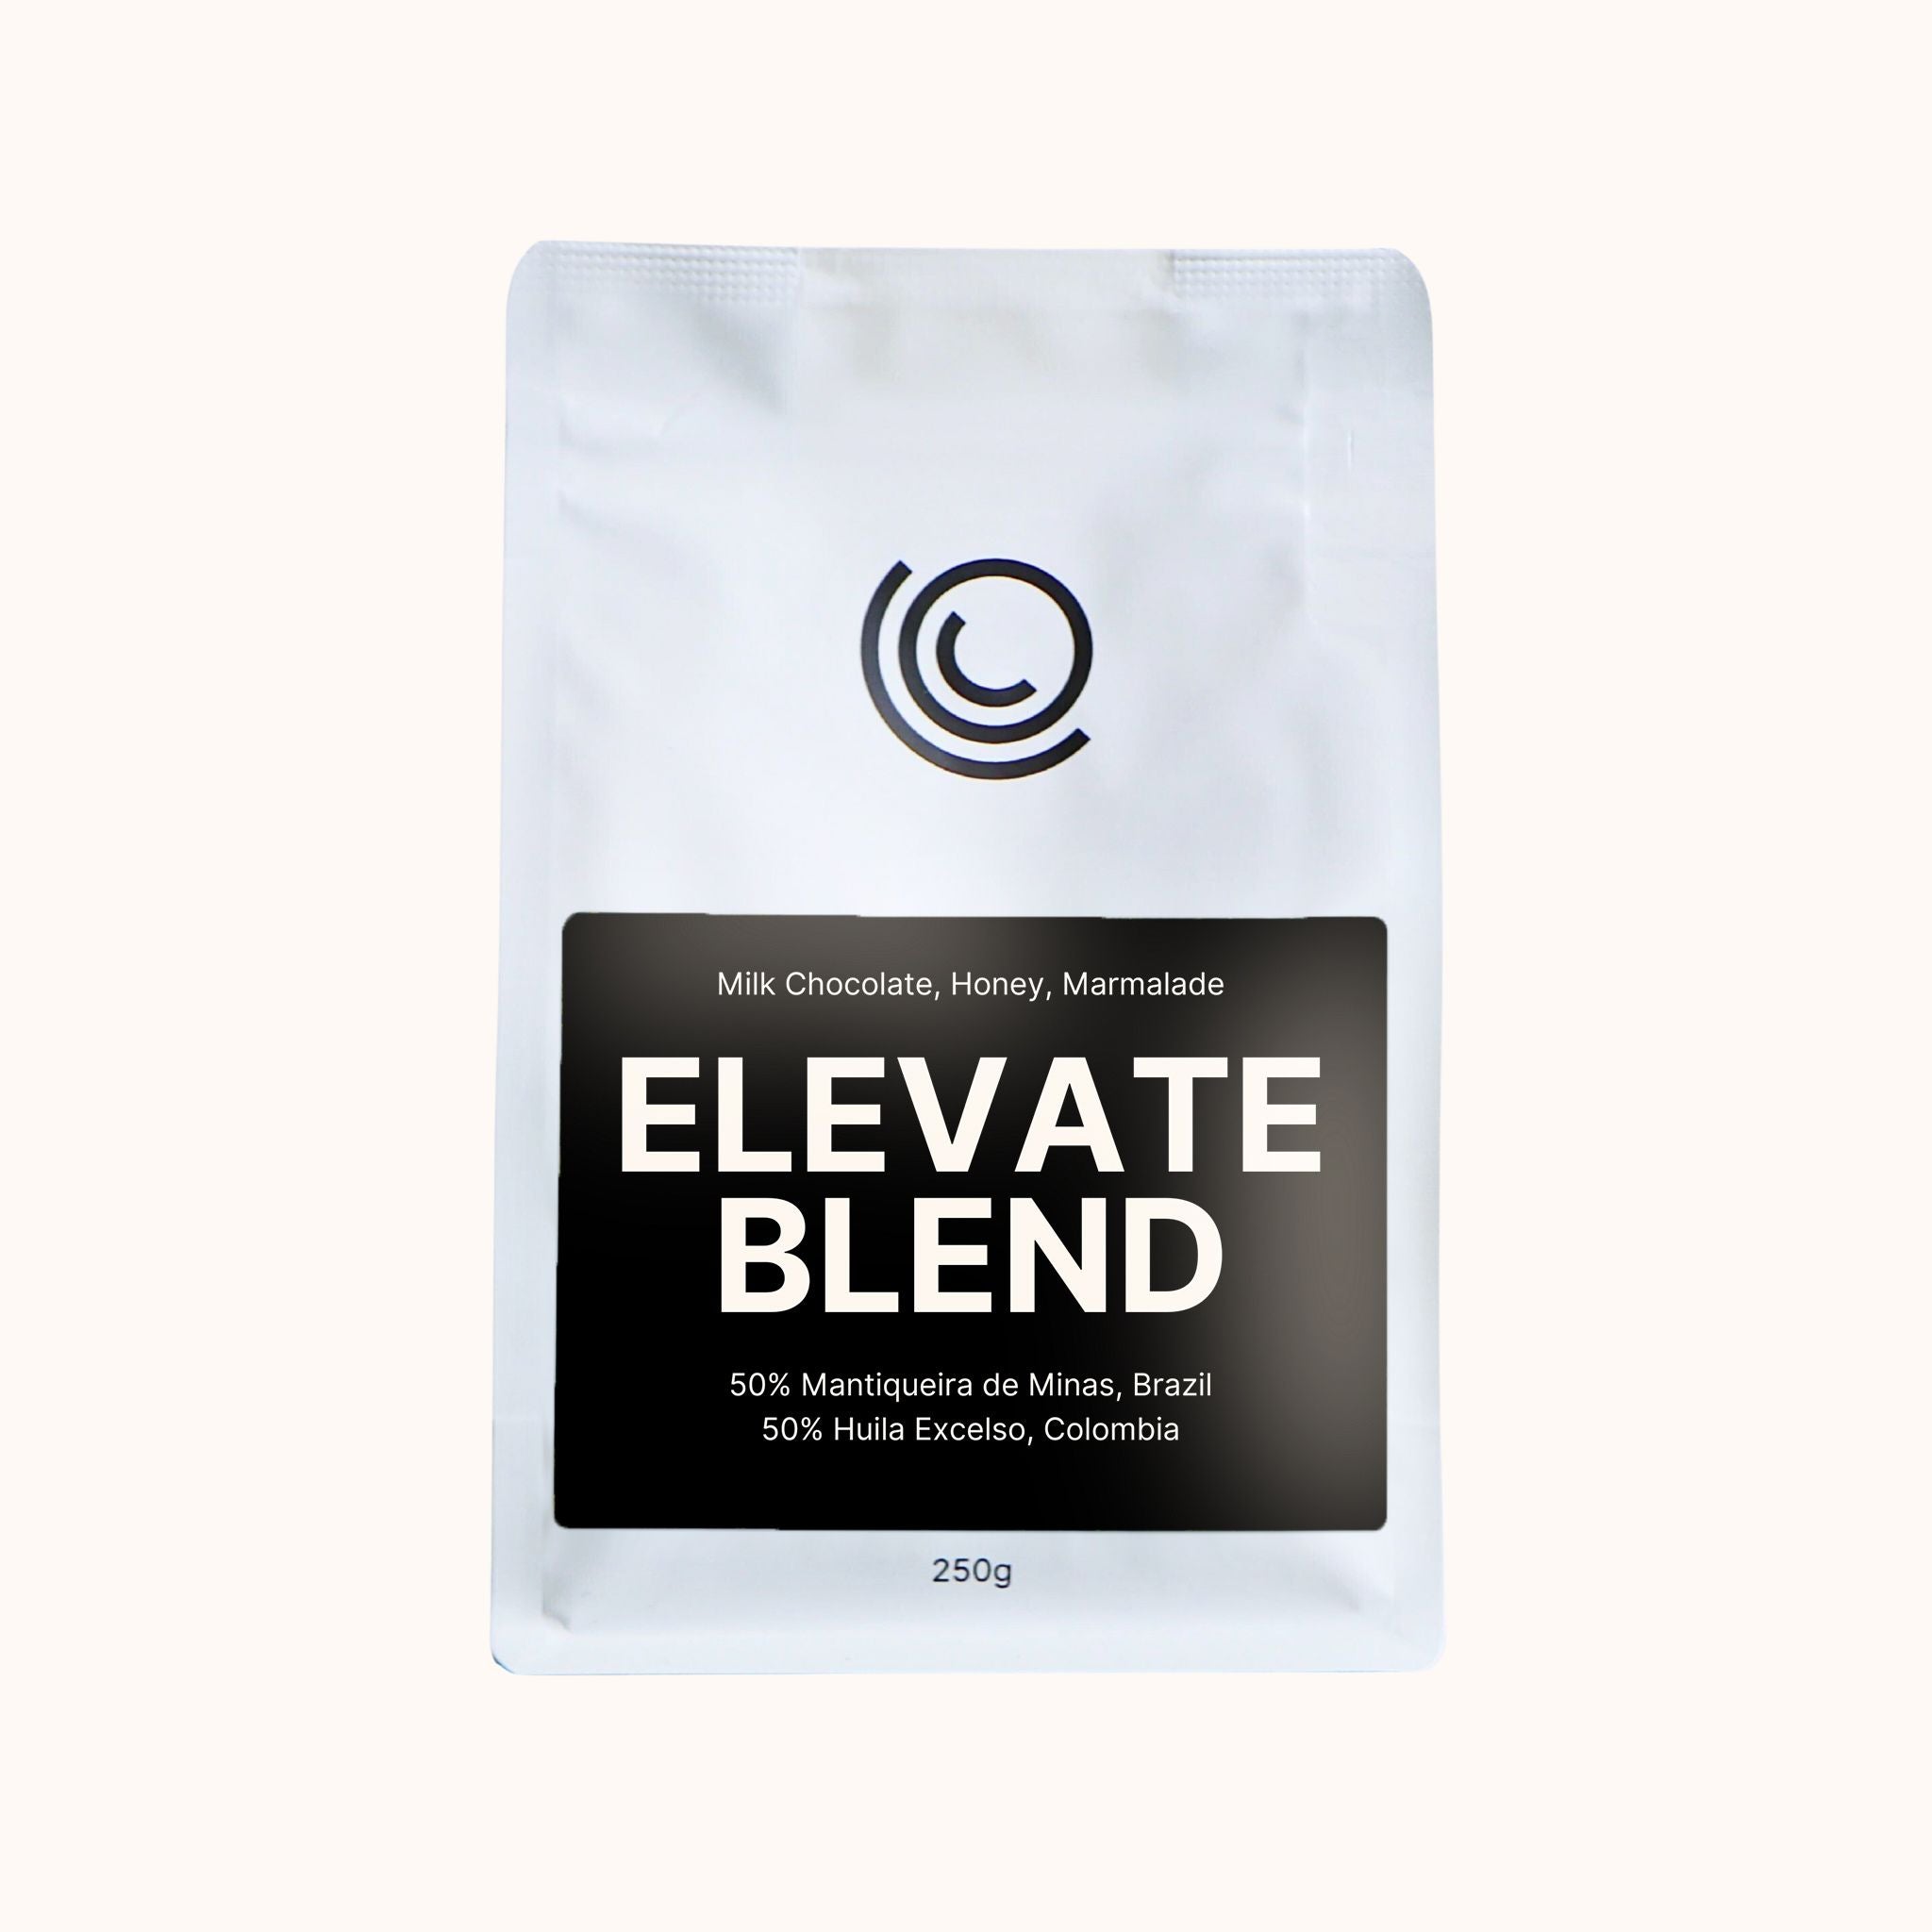 Coffee on Cue 250g bag of Elevate Blend